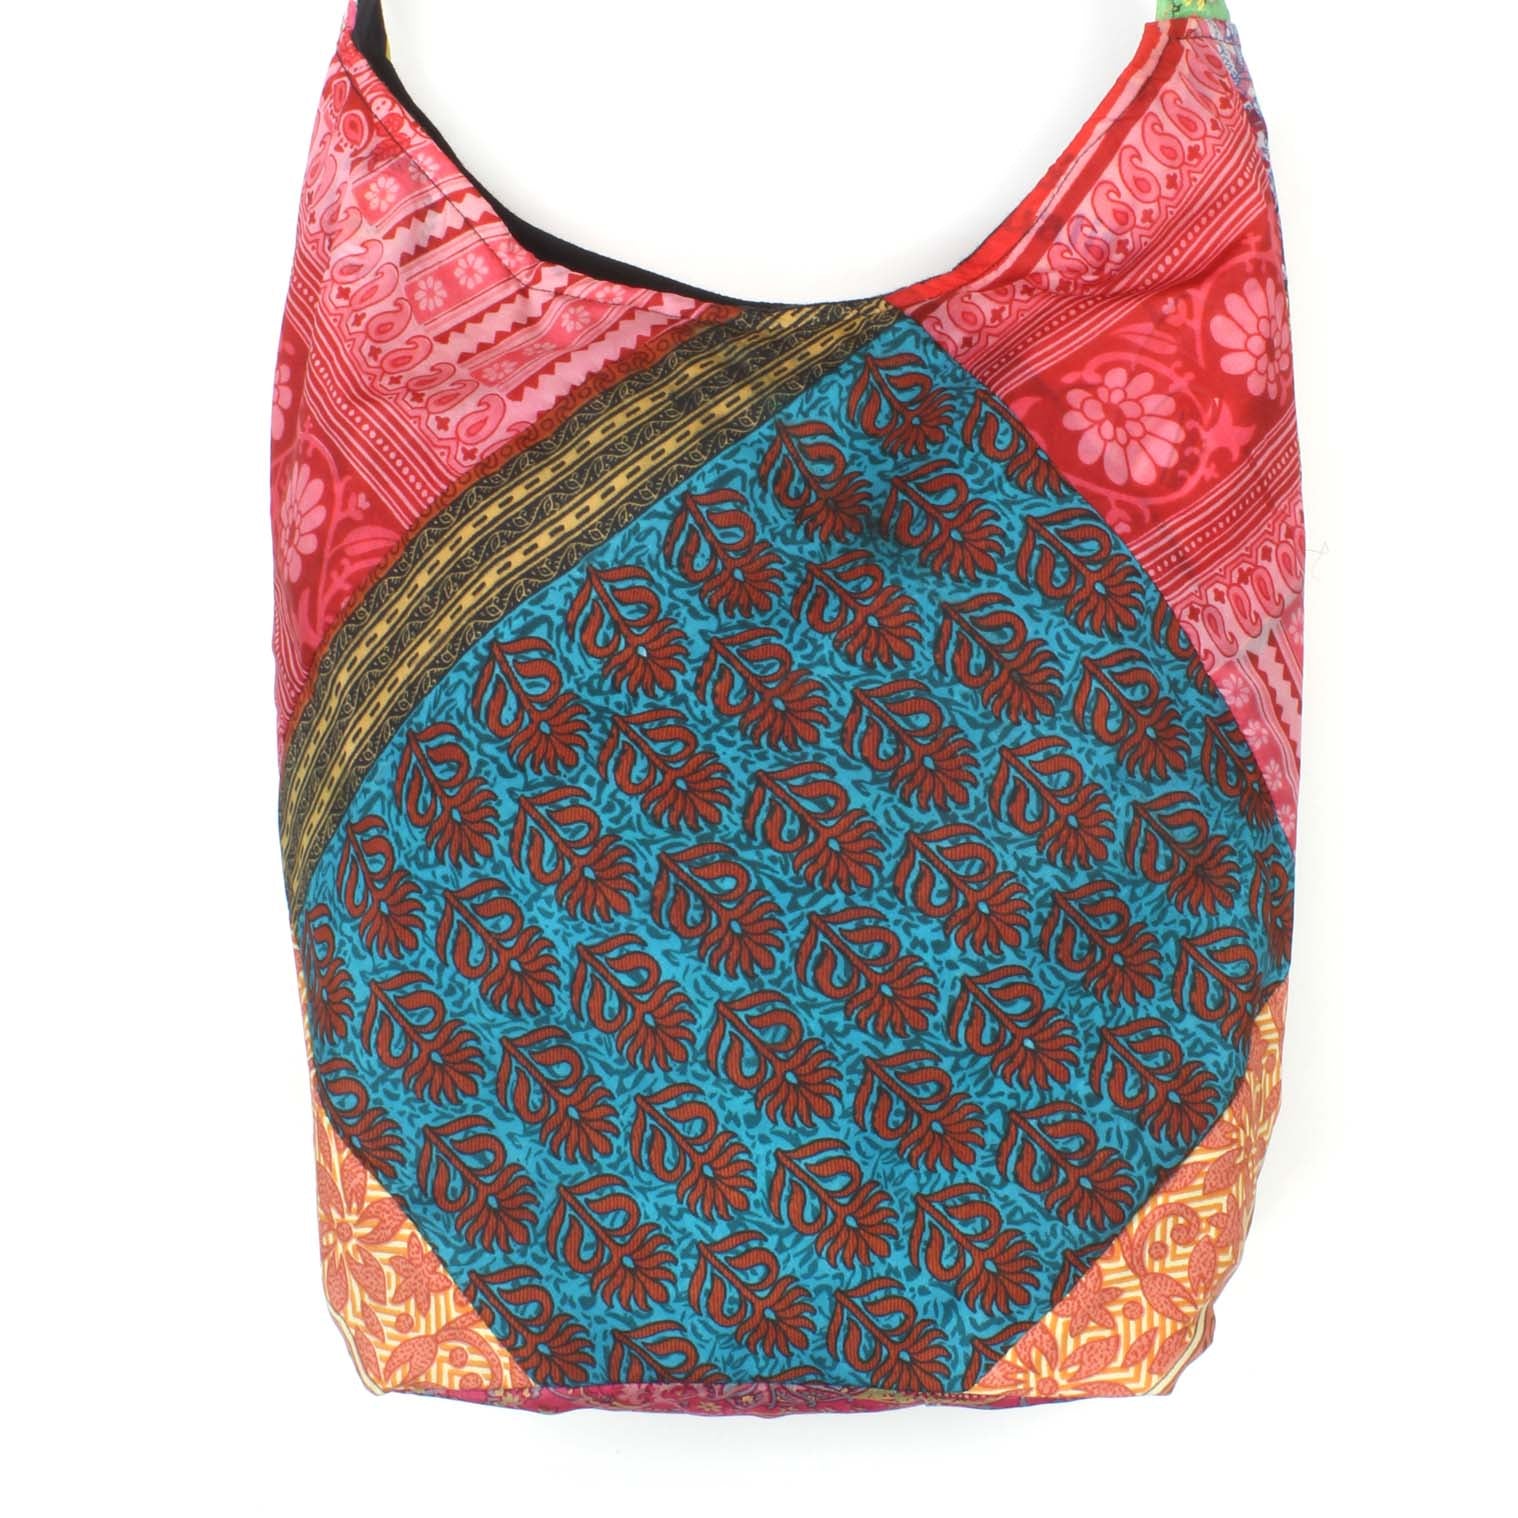 Recycled Sari Patchwork Shoulder Bag